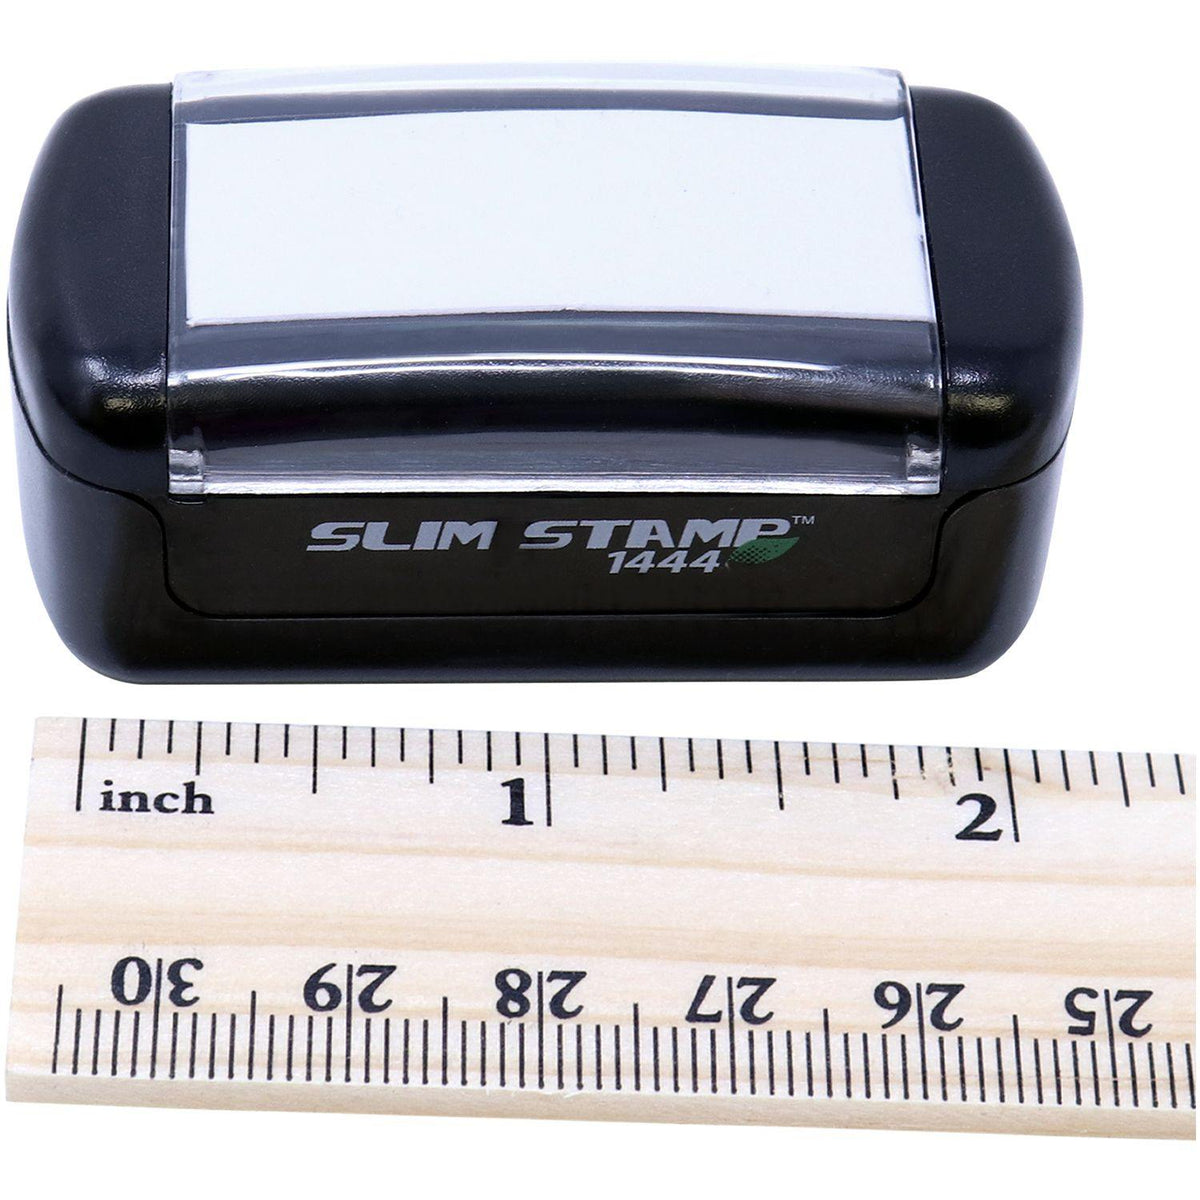 Measurement Slim Pre Inked Trustee Exhibit Stamp with Ruler